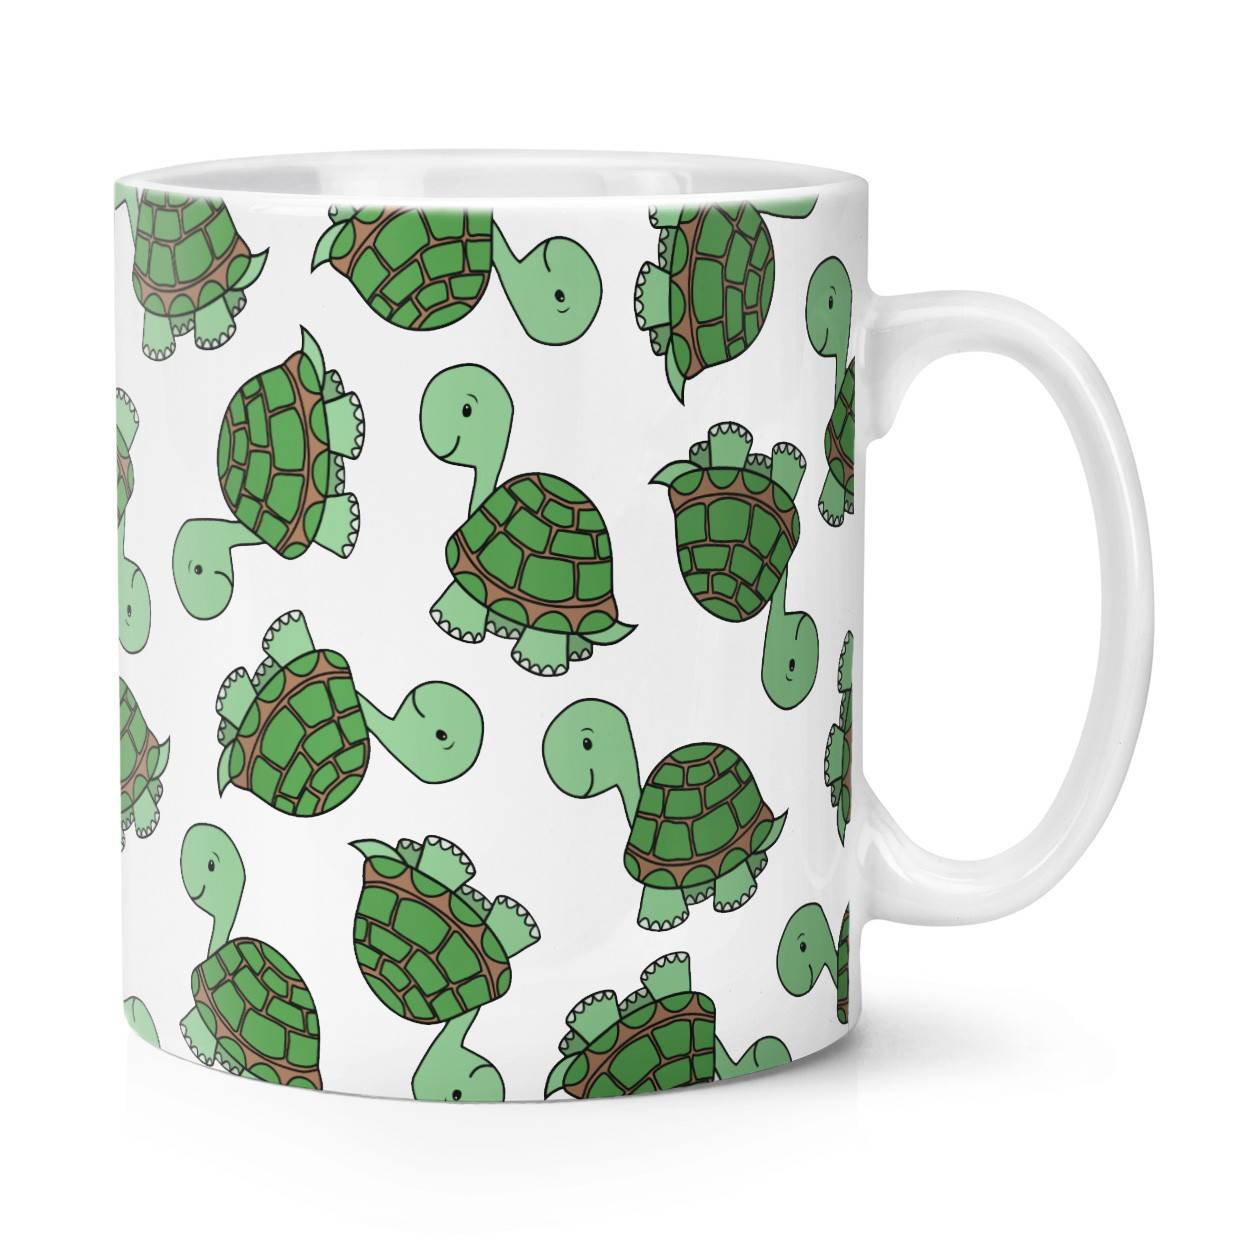 Crazy Tortoise Lady 17oz Large Latte Mug Cup Funny